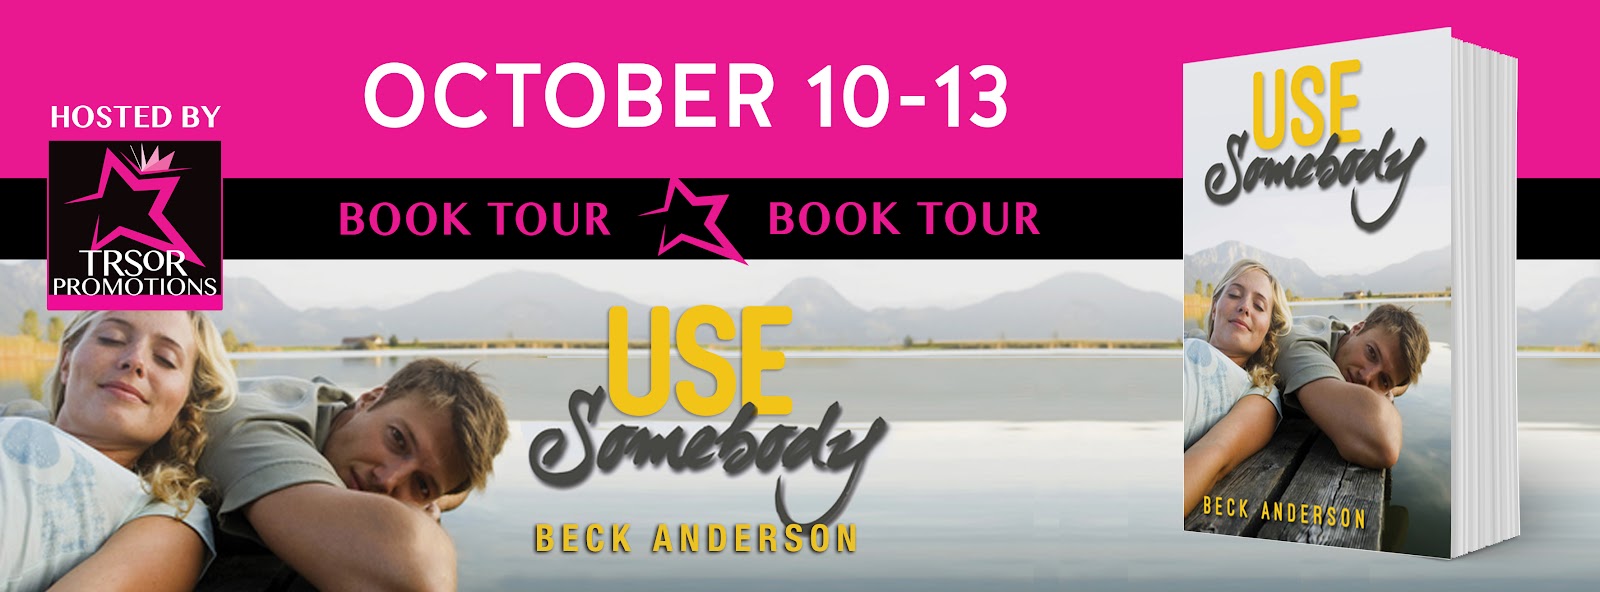 USE_SOMEBODY_BOOK_TOUR.jpg